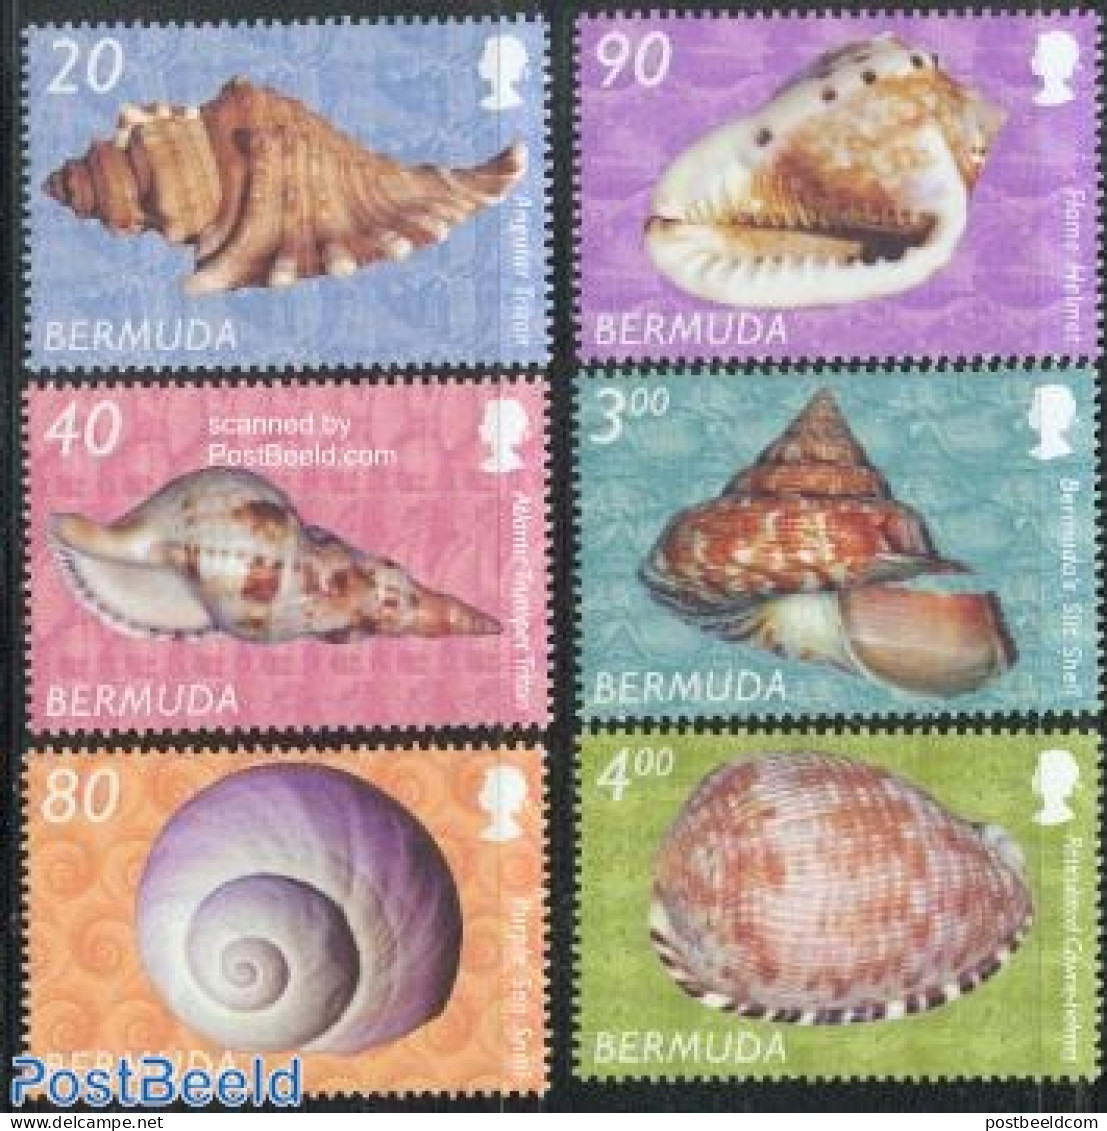 Bermuda 2003 Definitives, Shells 6v, Mint NH, Nature - Shells & Crustaceans - Vie Marine